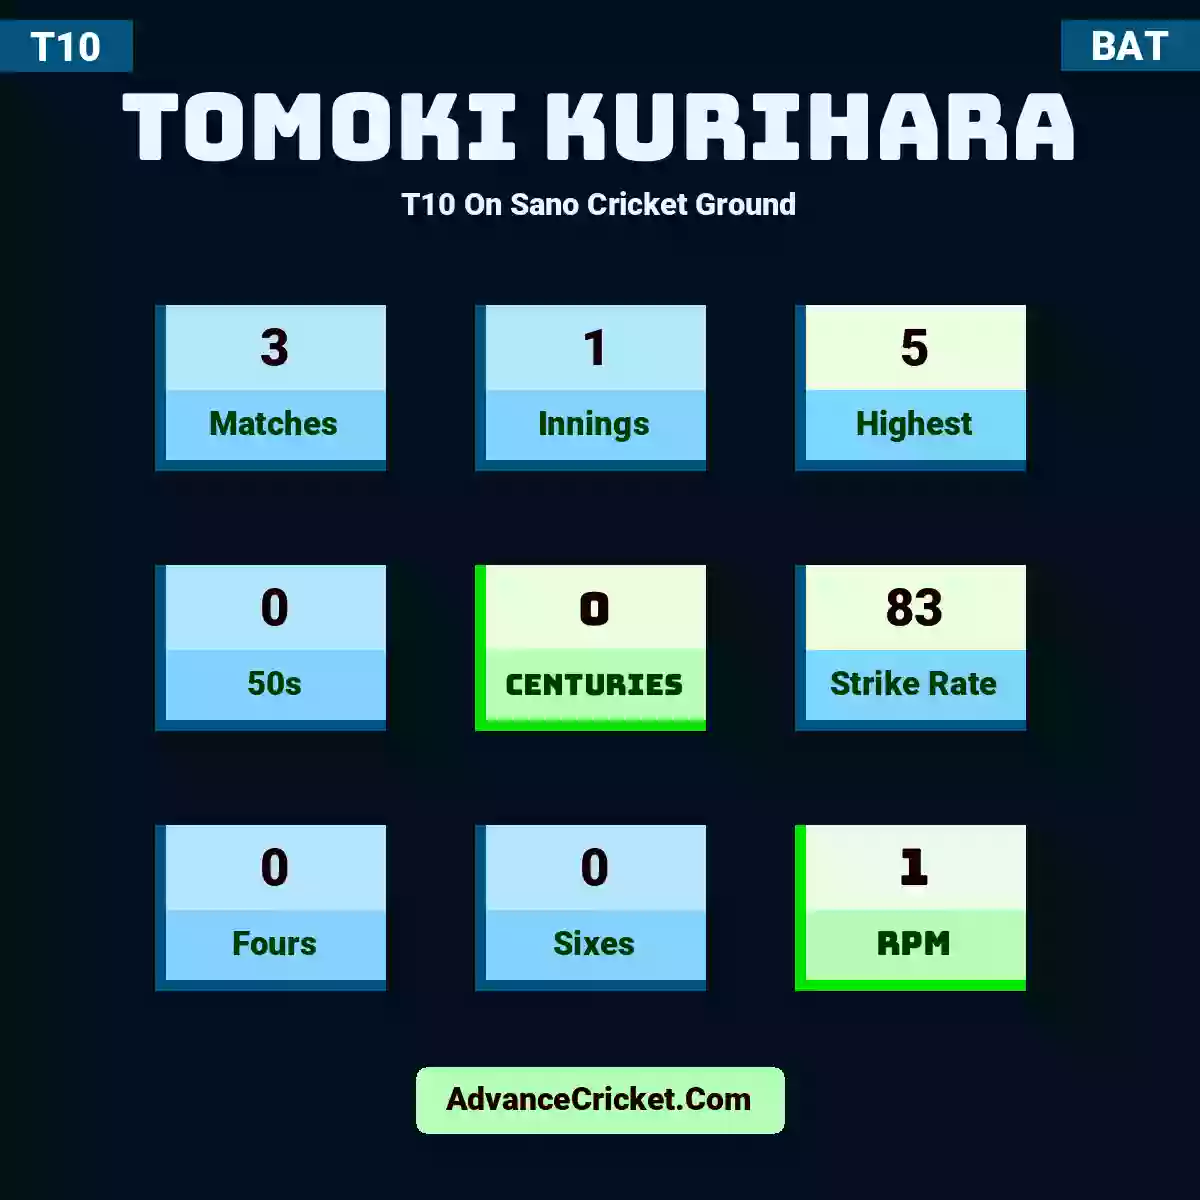 Tomoki Kurihara T10  On Sano Cricket Ground, Tomoki Kurihara played 3 matches, scored 5 runs as highest, 0 half-centuries, and 0 centuries, with a strike rate of 83. T.Kurihara hit 0 fours and 0 sixes, with an RPM of 1.